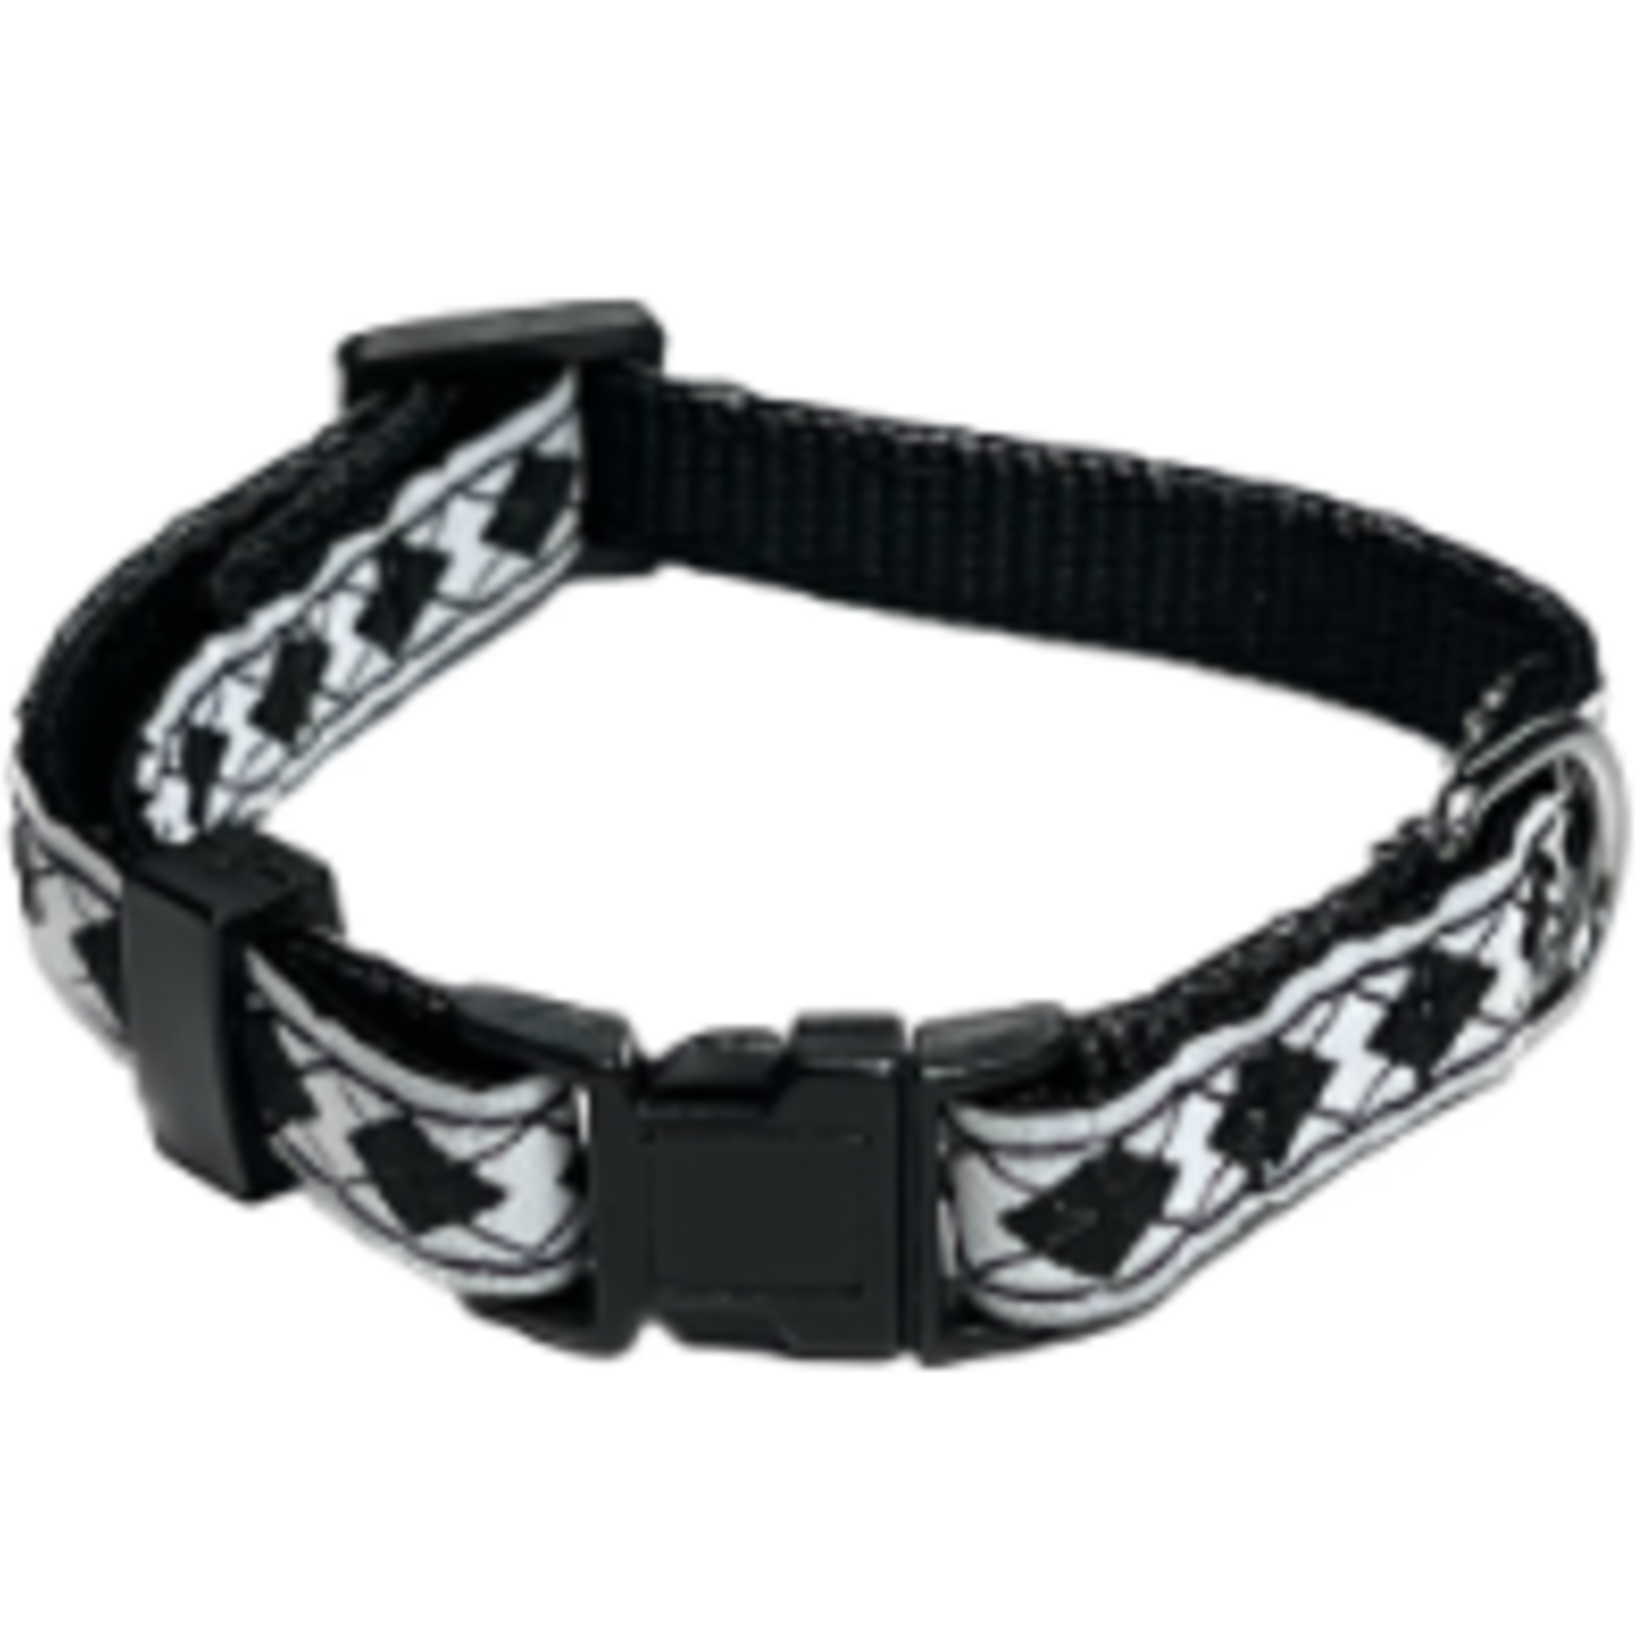 Hunter Brand Adjustable Nylon Collar - Clip type - Black/White/Diamonds